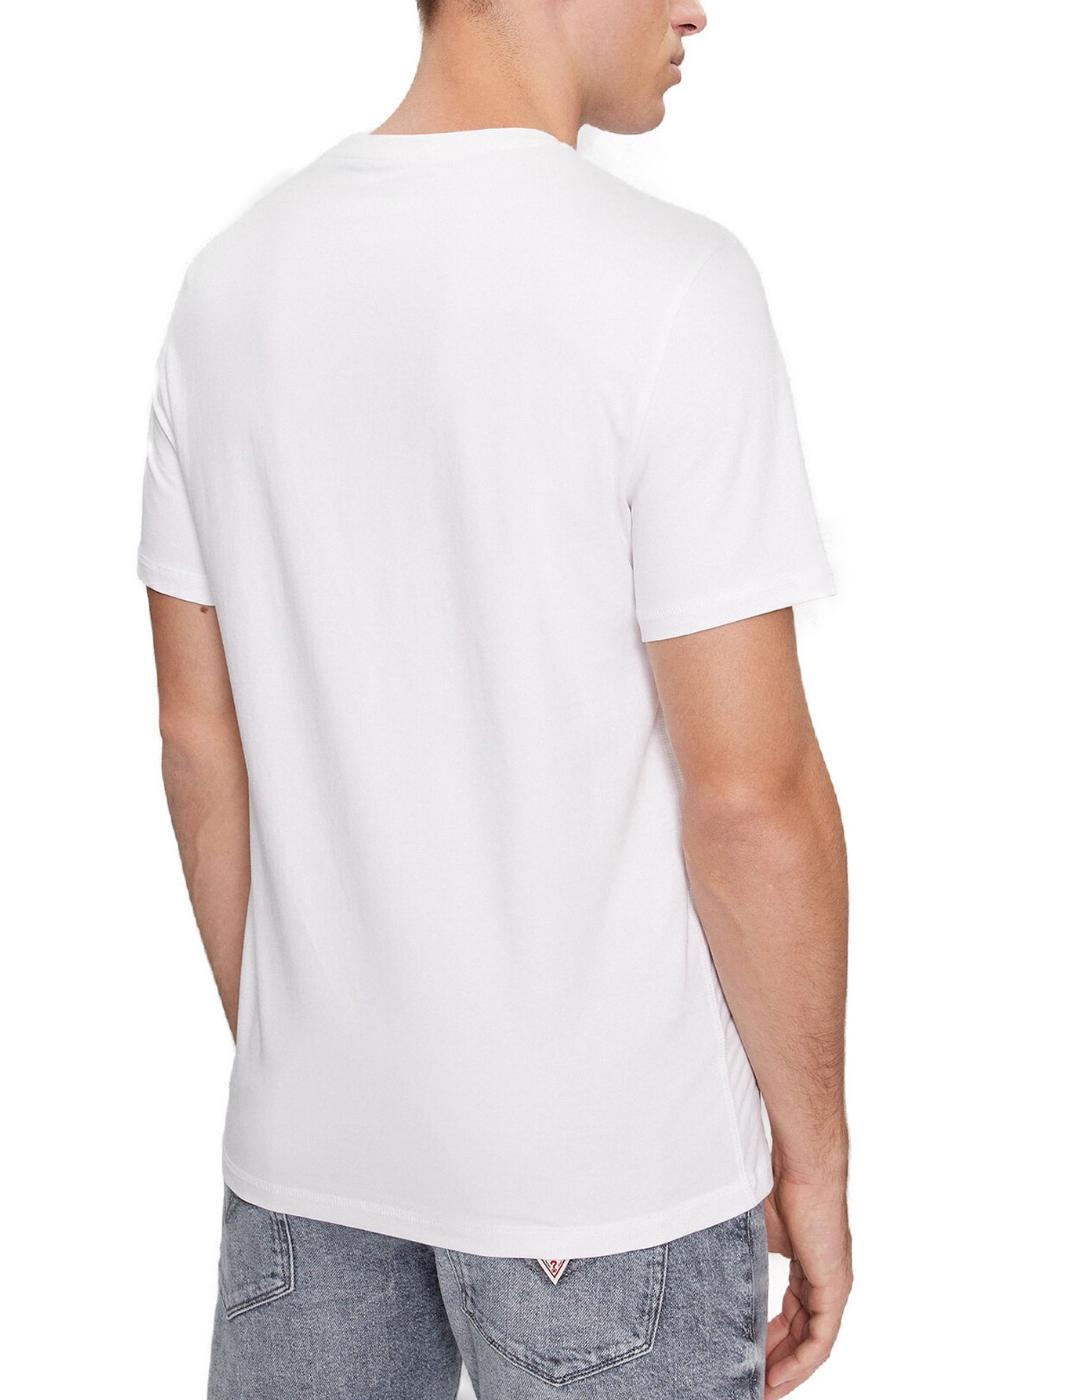 Camiseta Guess Triangle blanco manga corta para hombre